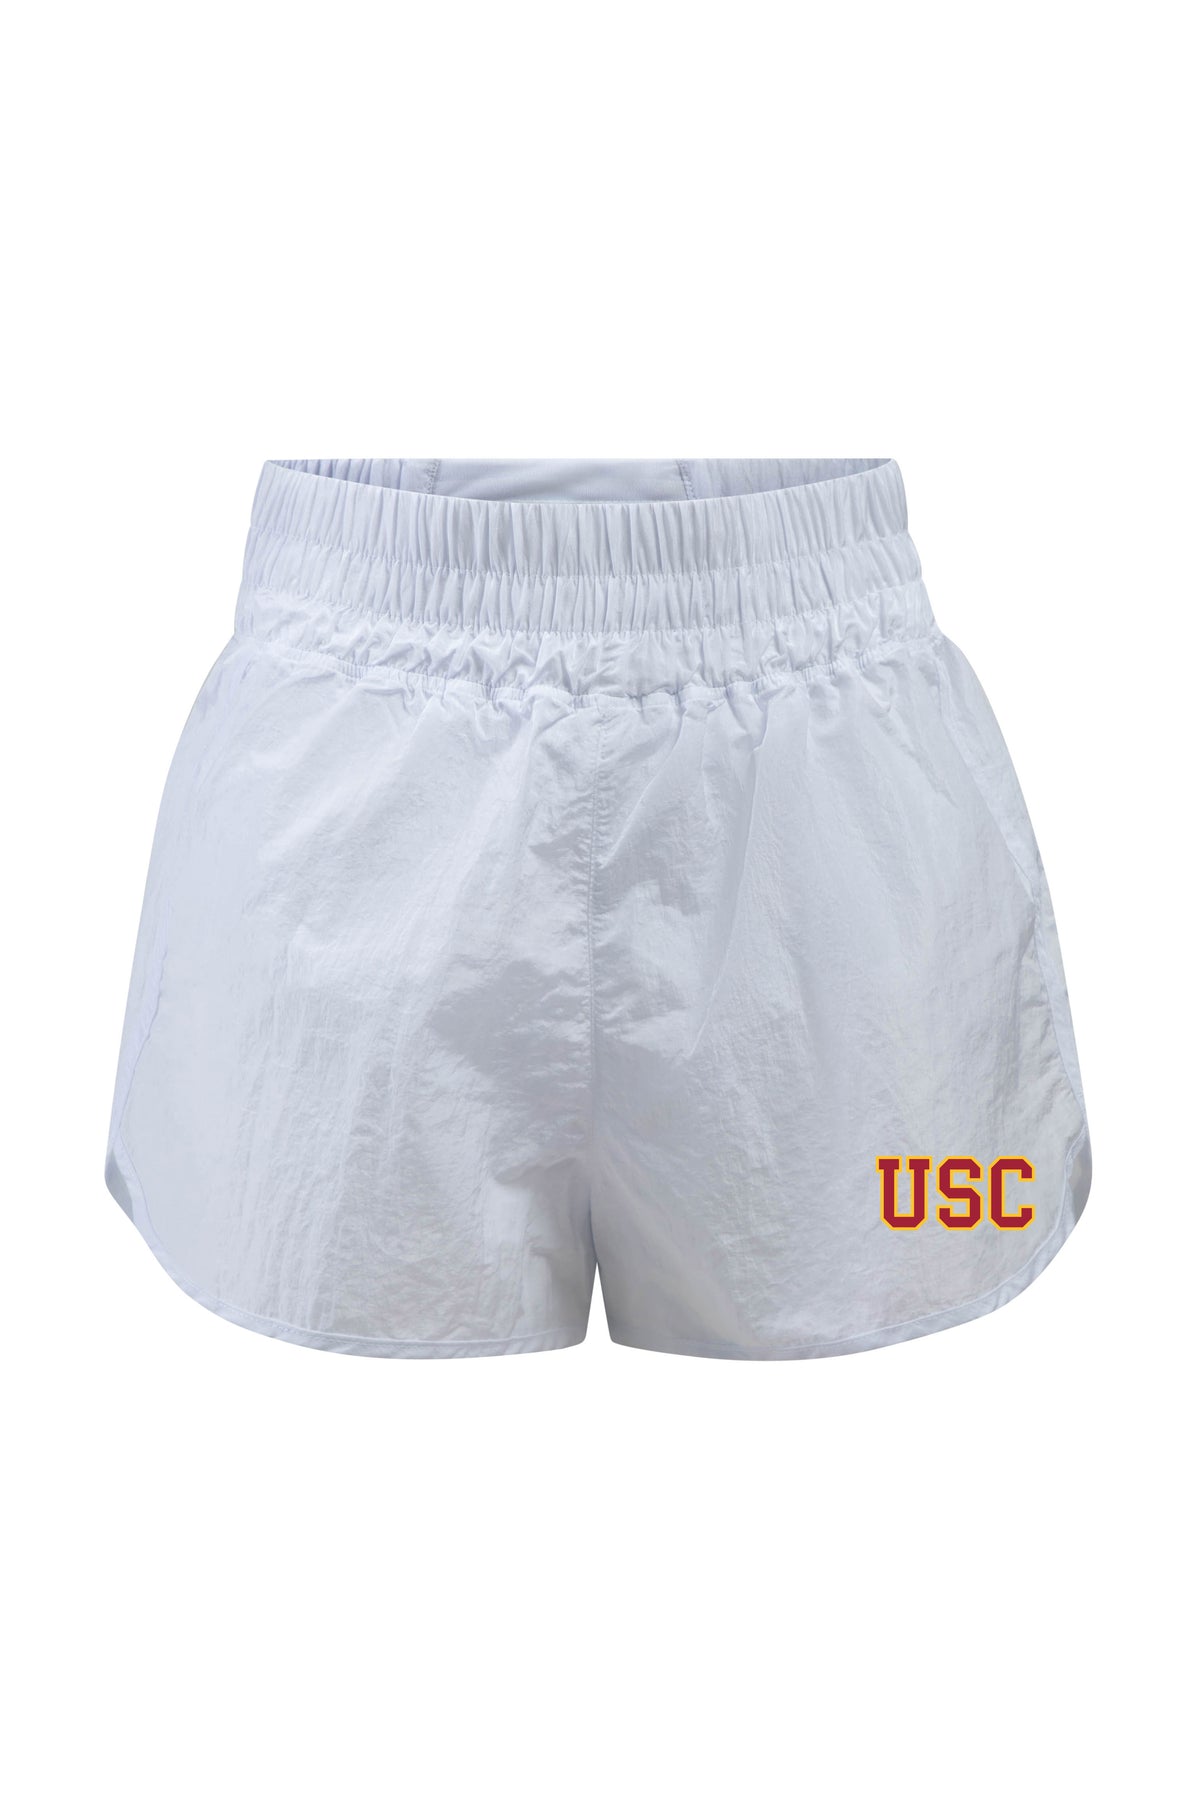 University of Southern California Boxer Short